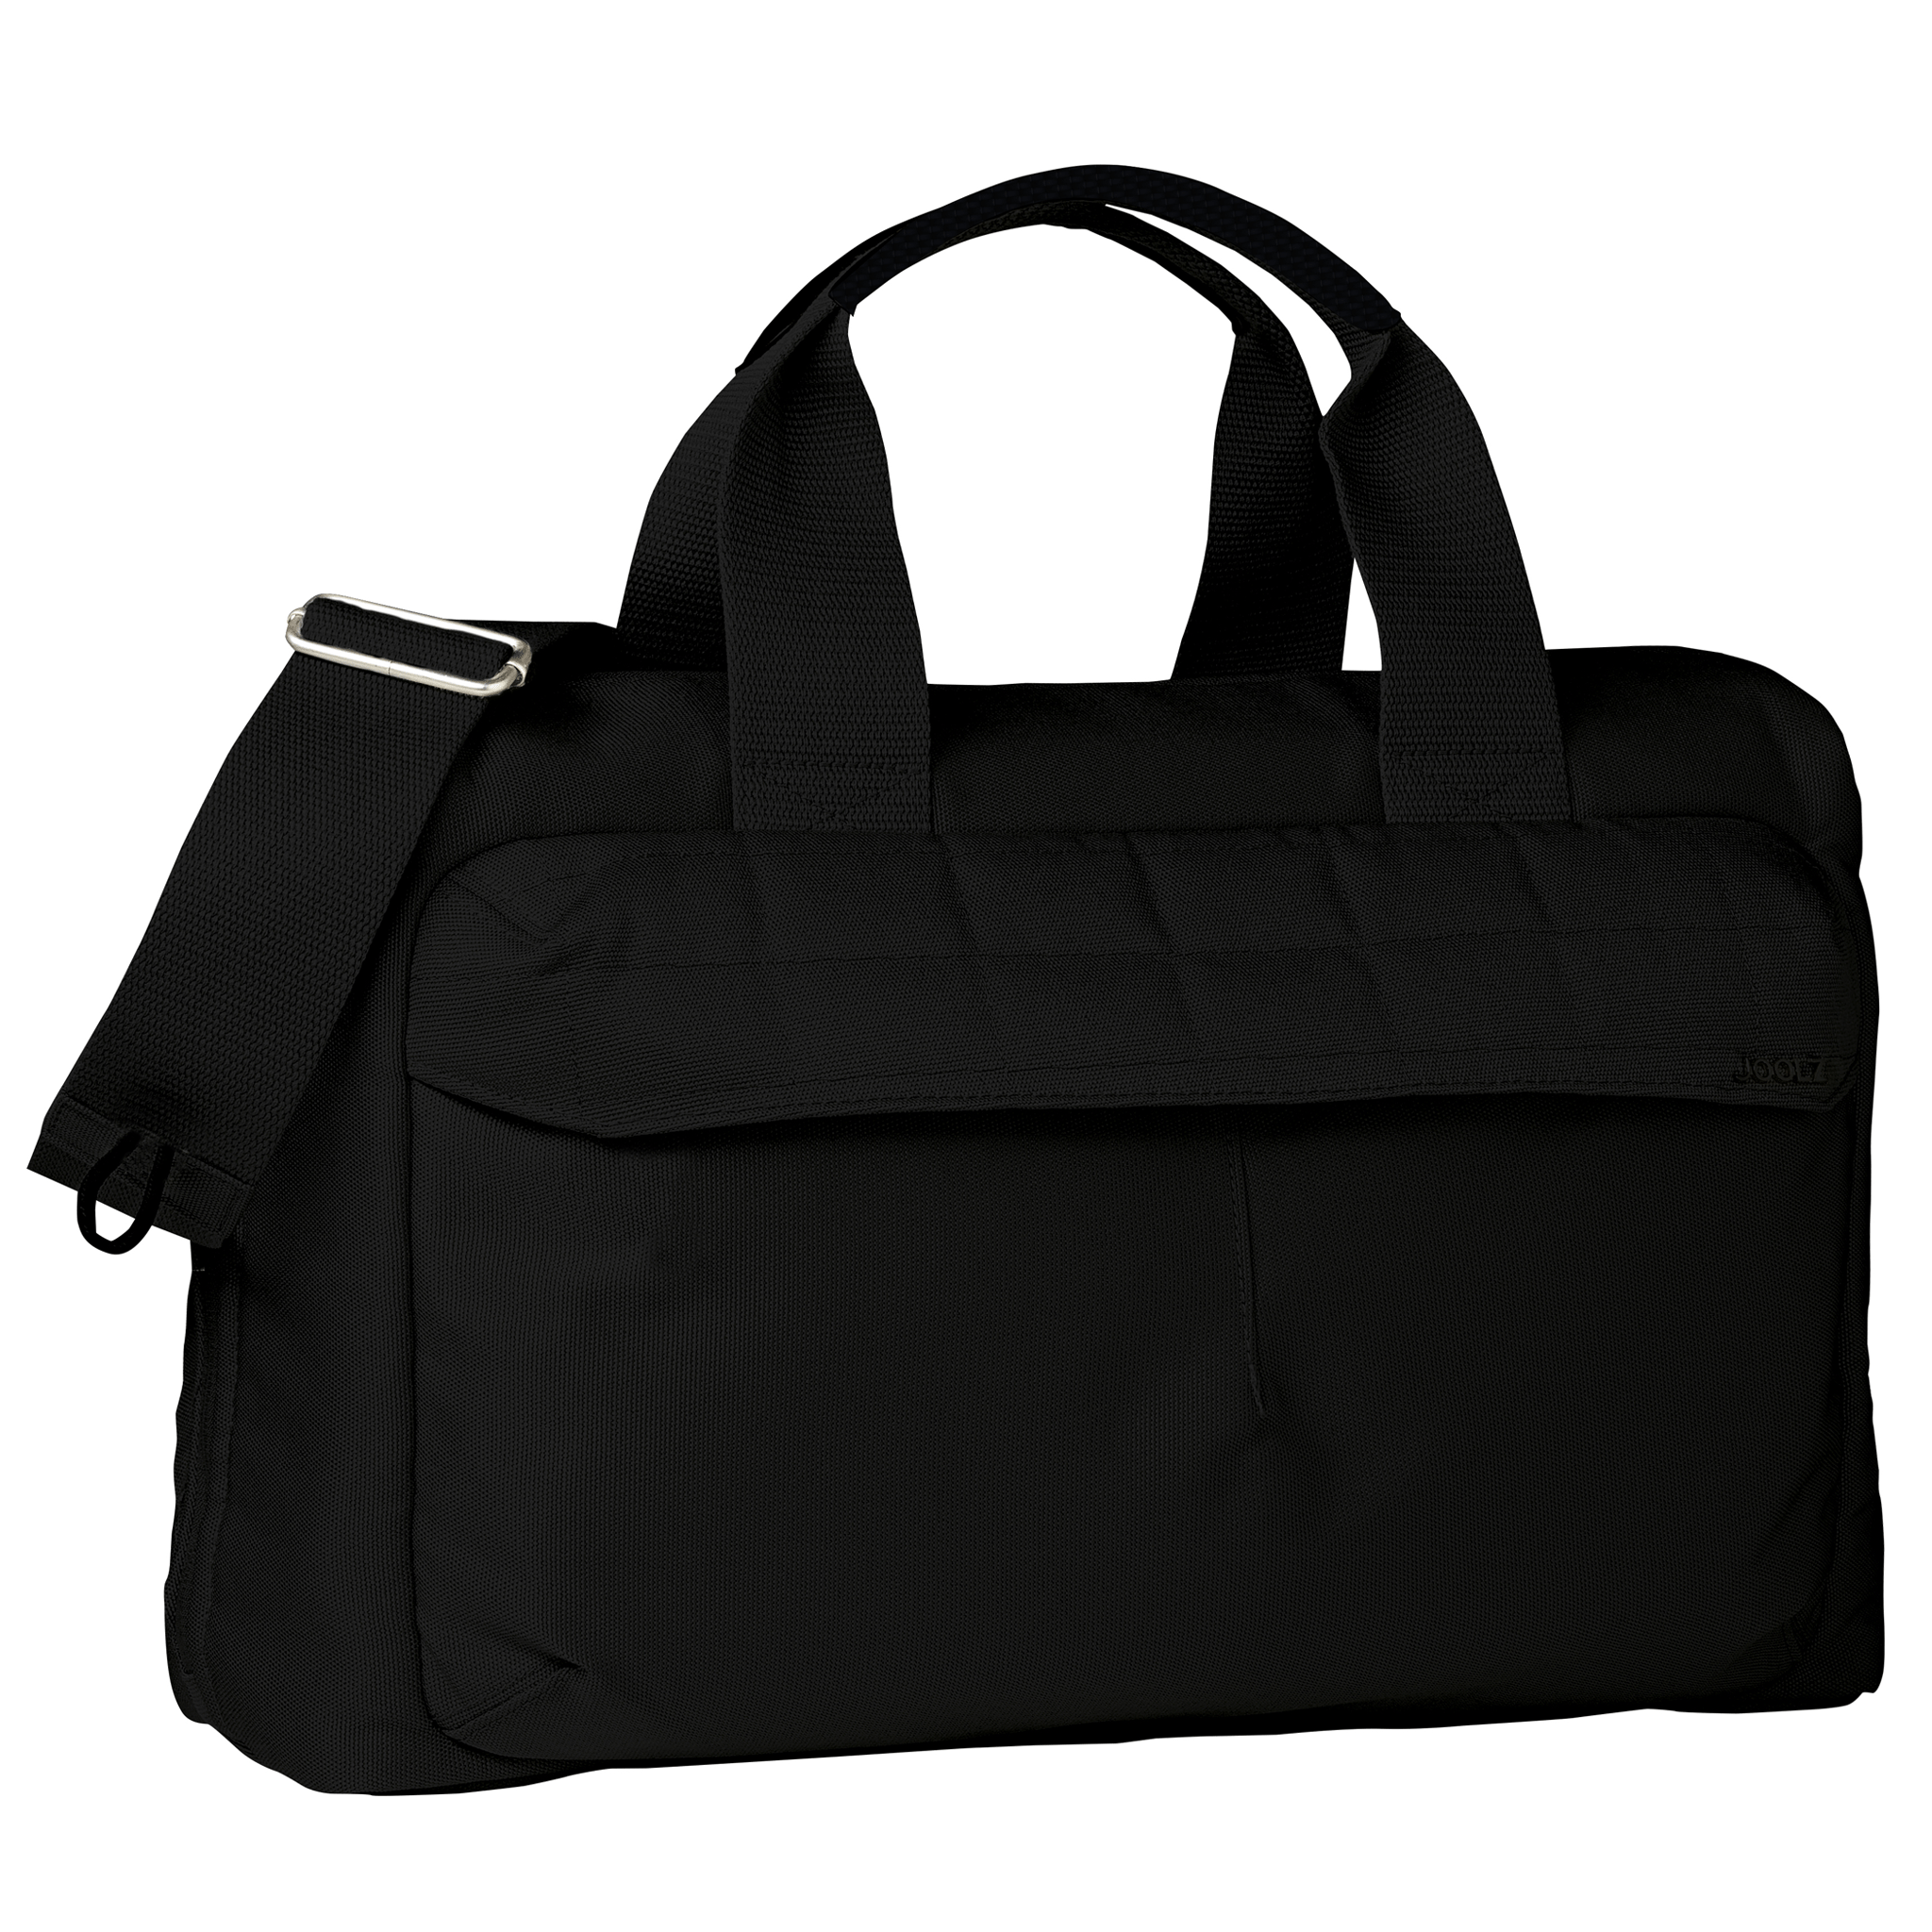 Joolz Uni2 Nursery Bag Brilliant Black Changing Bags 560163 8715688044292